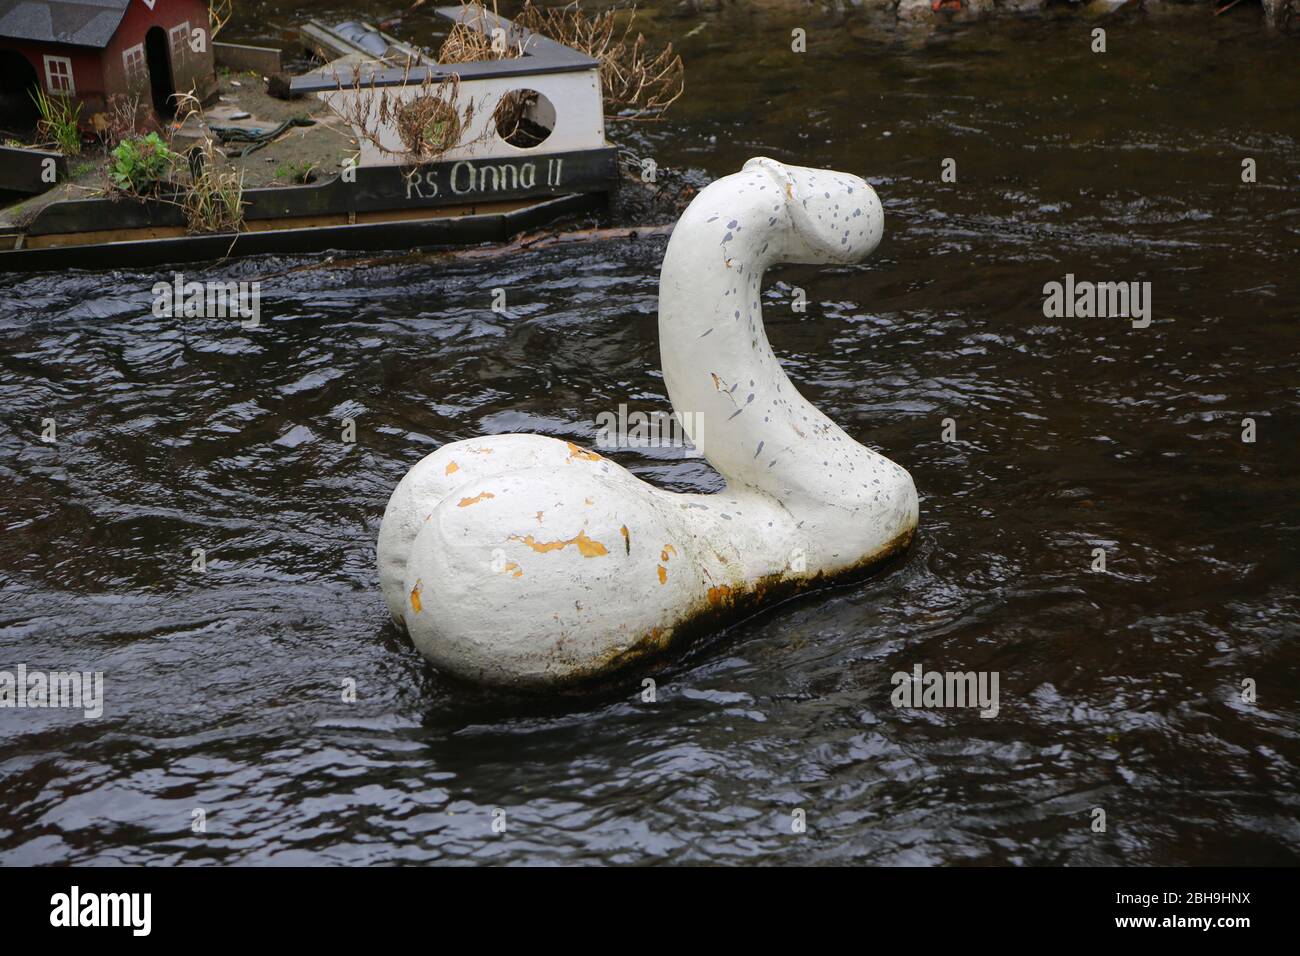 Floating phallus in Oslo river Stock Photo